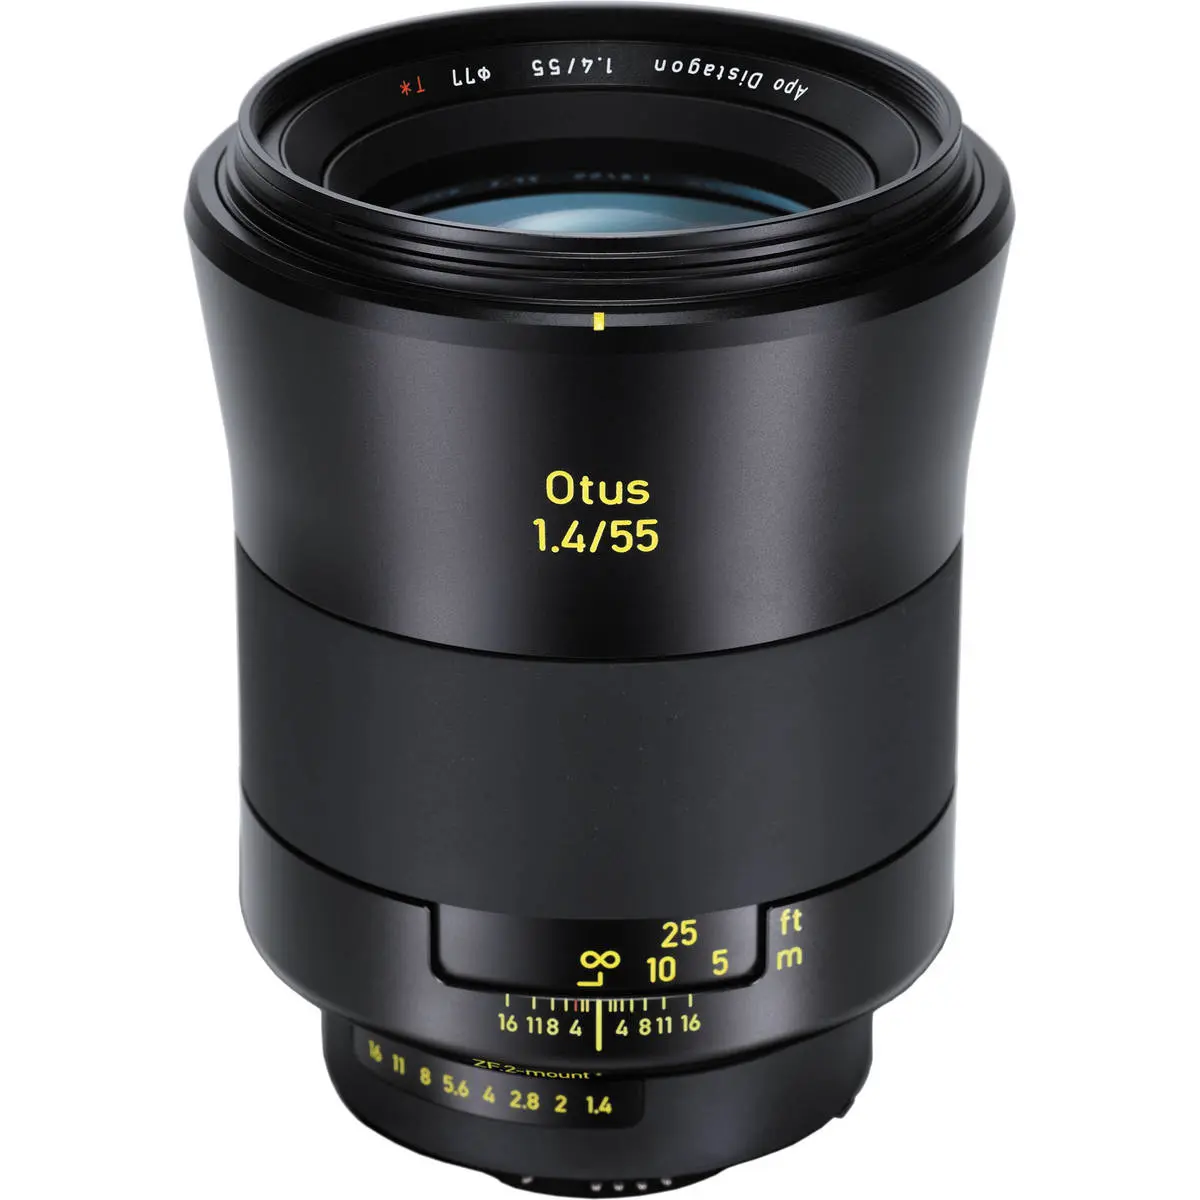 1. Carl Zeiss Otus Distagon T* 1.4/55 ZF.2 (Nikon) Lens